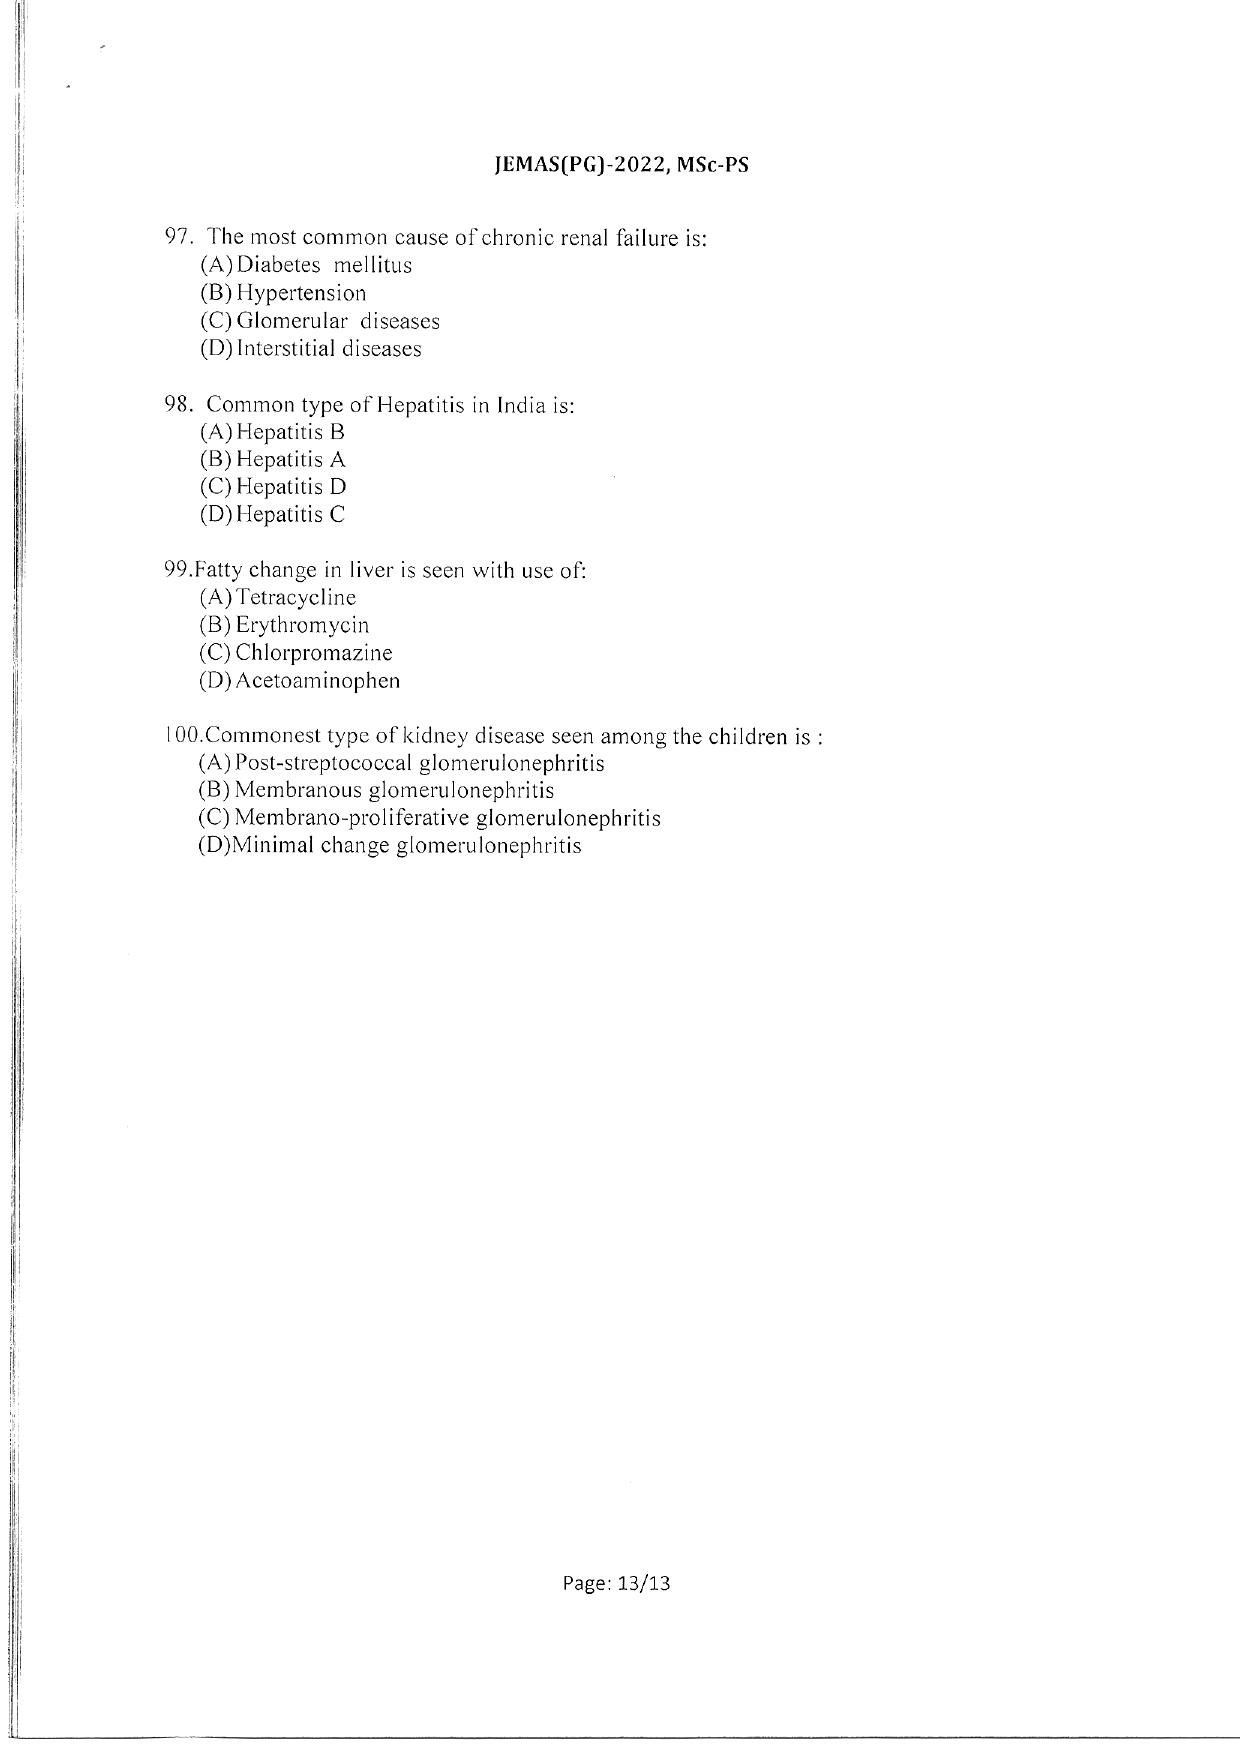 WBJEEB JEMAS (PG) 2022 MSc PS Question Paper - Page 15